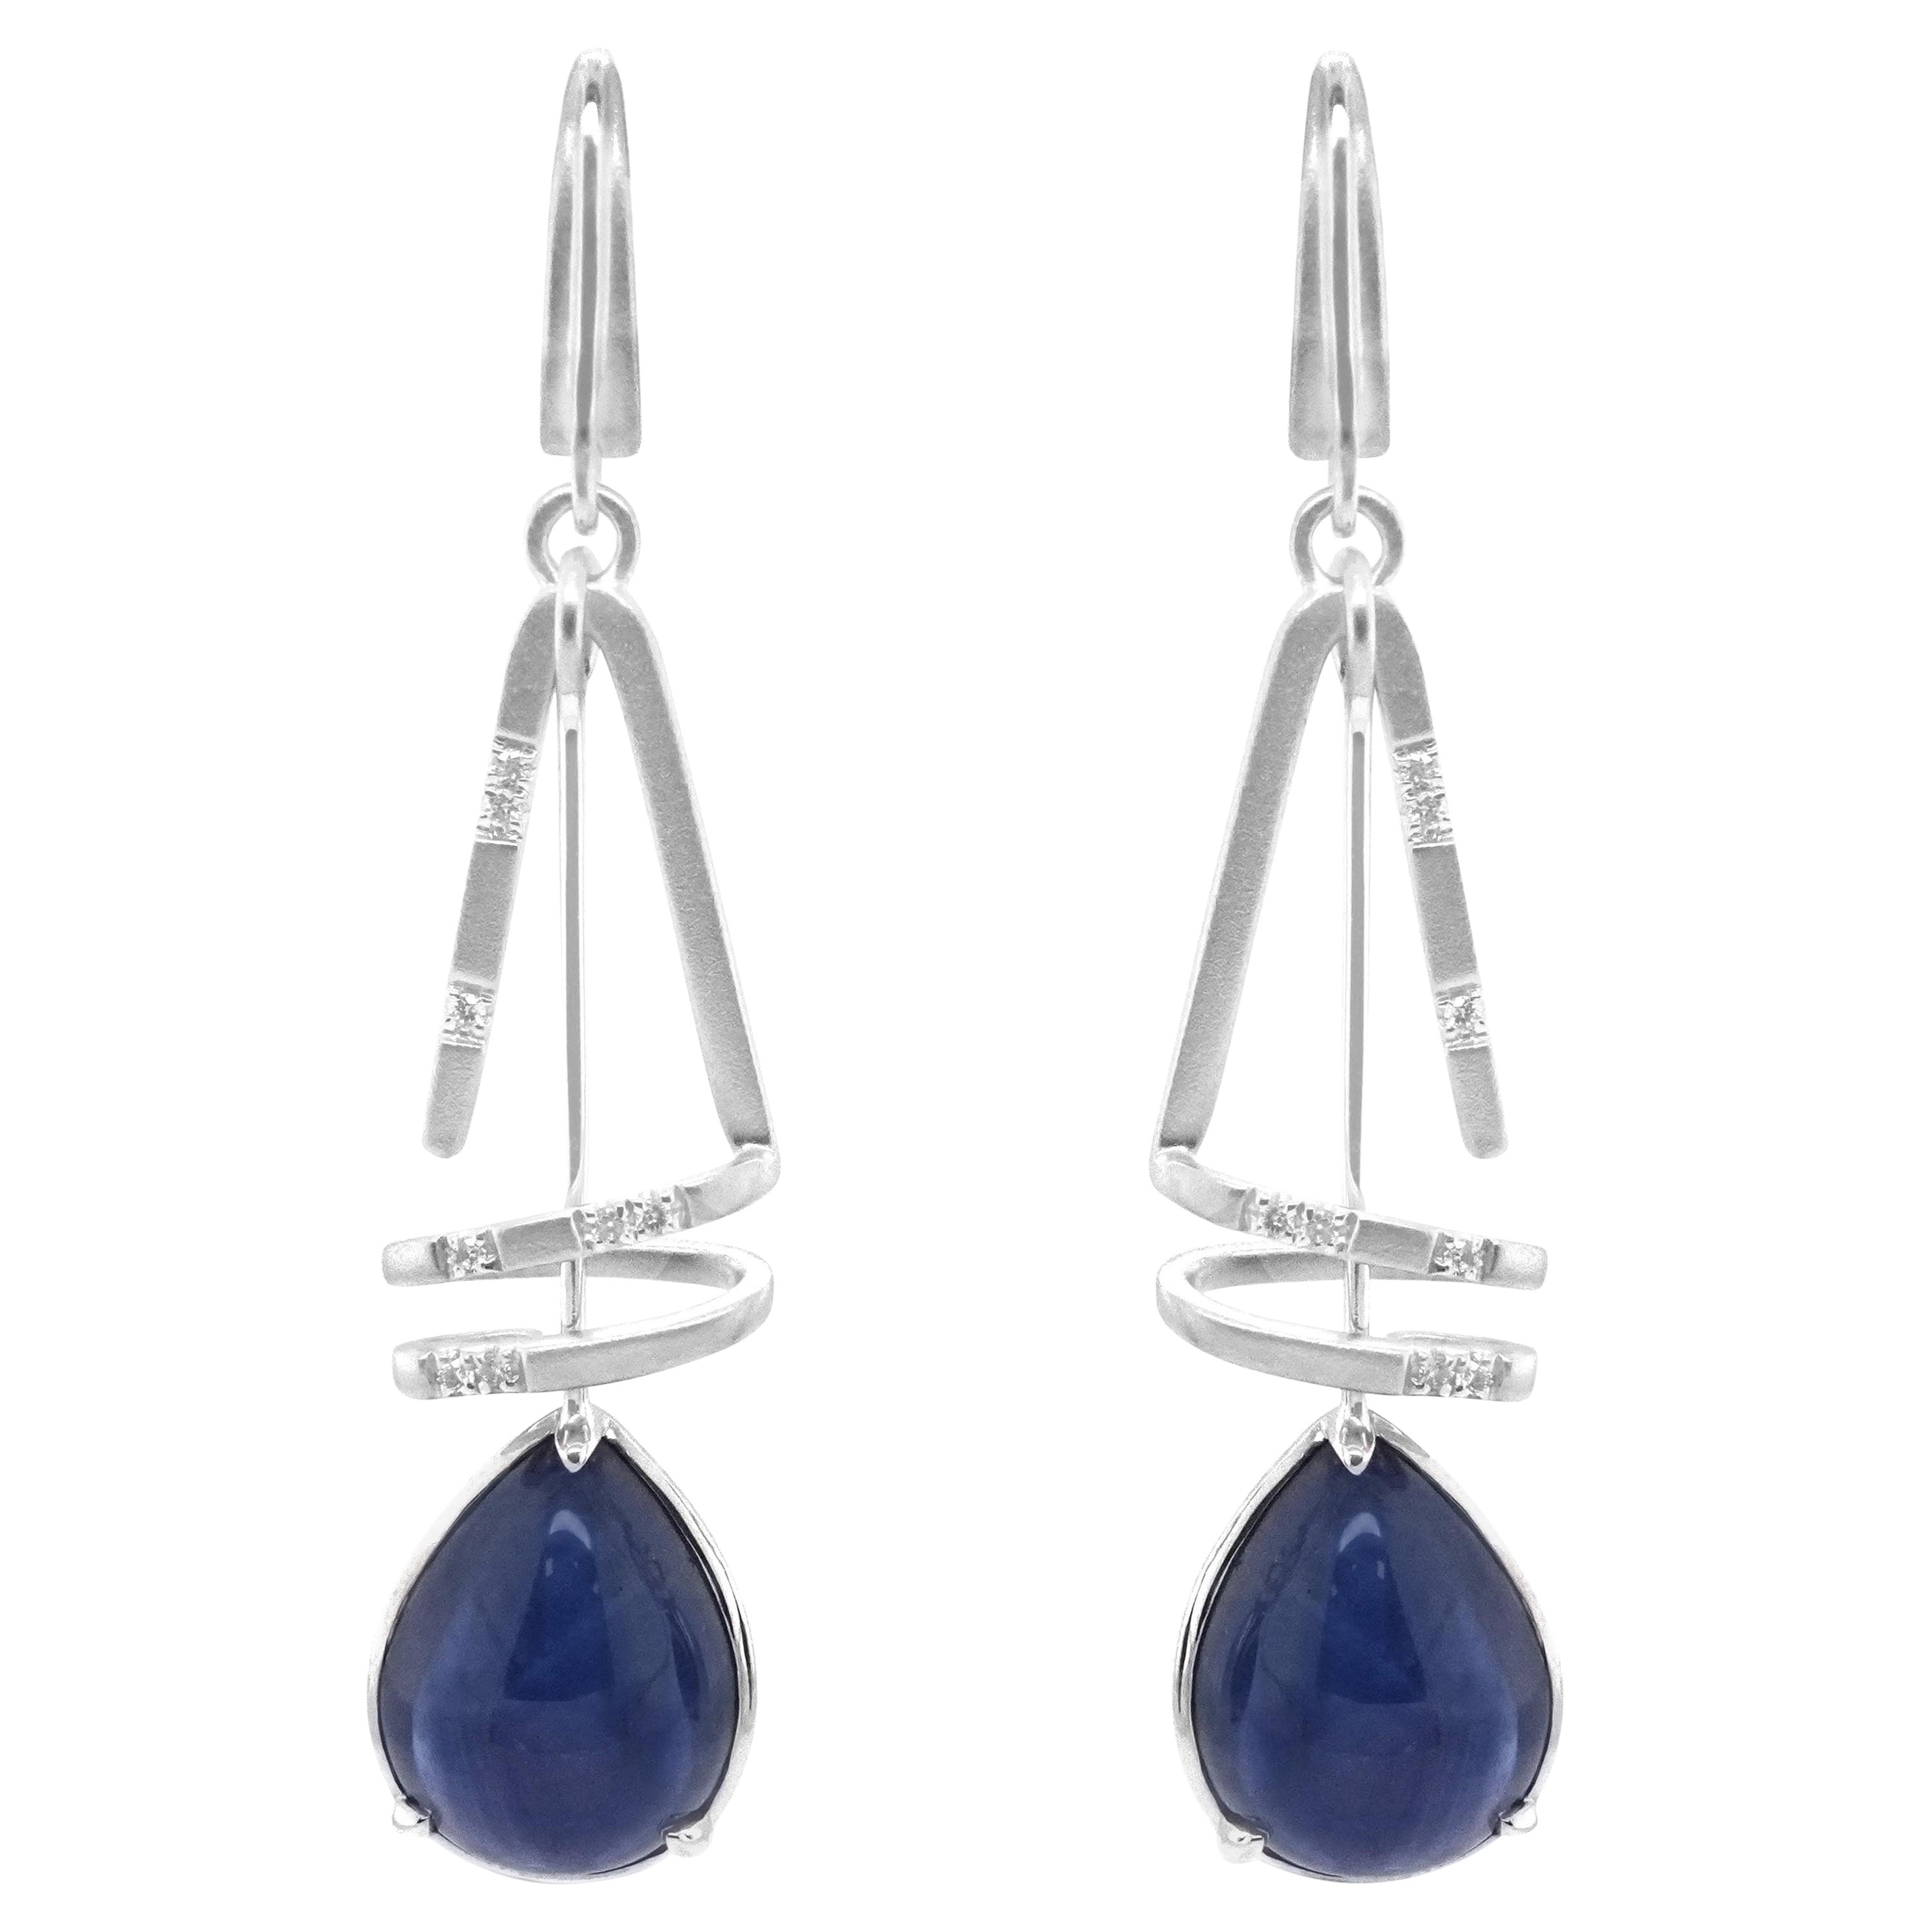 18k White Gold Sapphire Lanterns 6.74 Carat Intense Blue Sapphire Dangle Earring